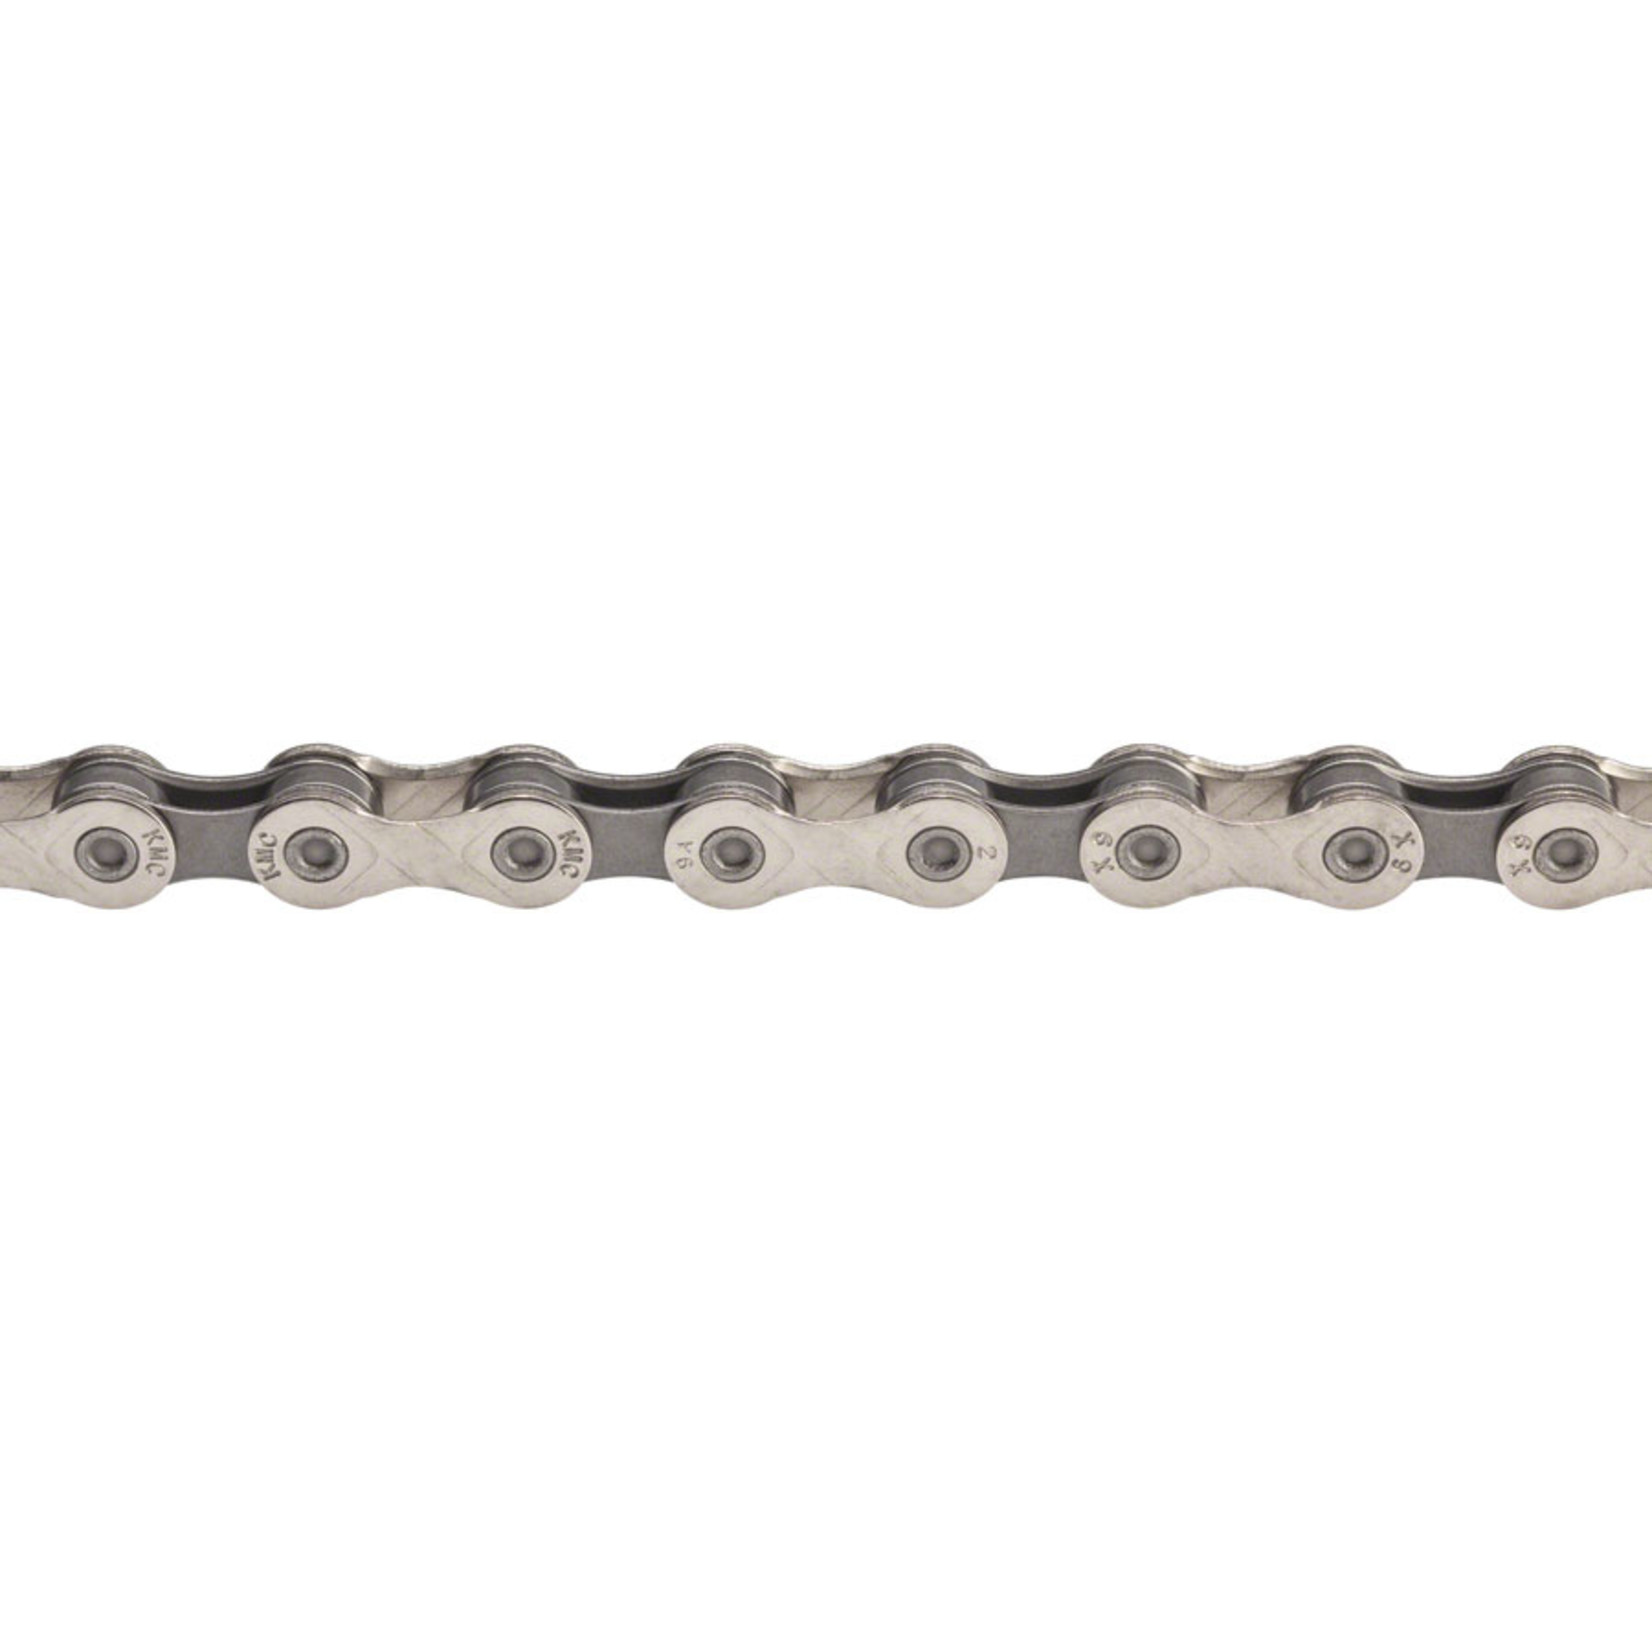 KMC KMC X9 Chain - 9-Speed 116 Links Silver/Gray